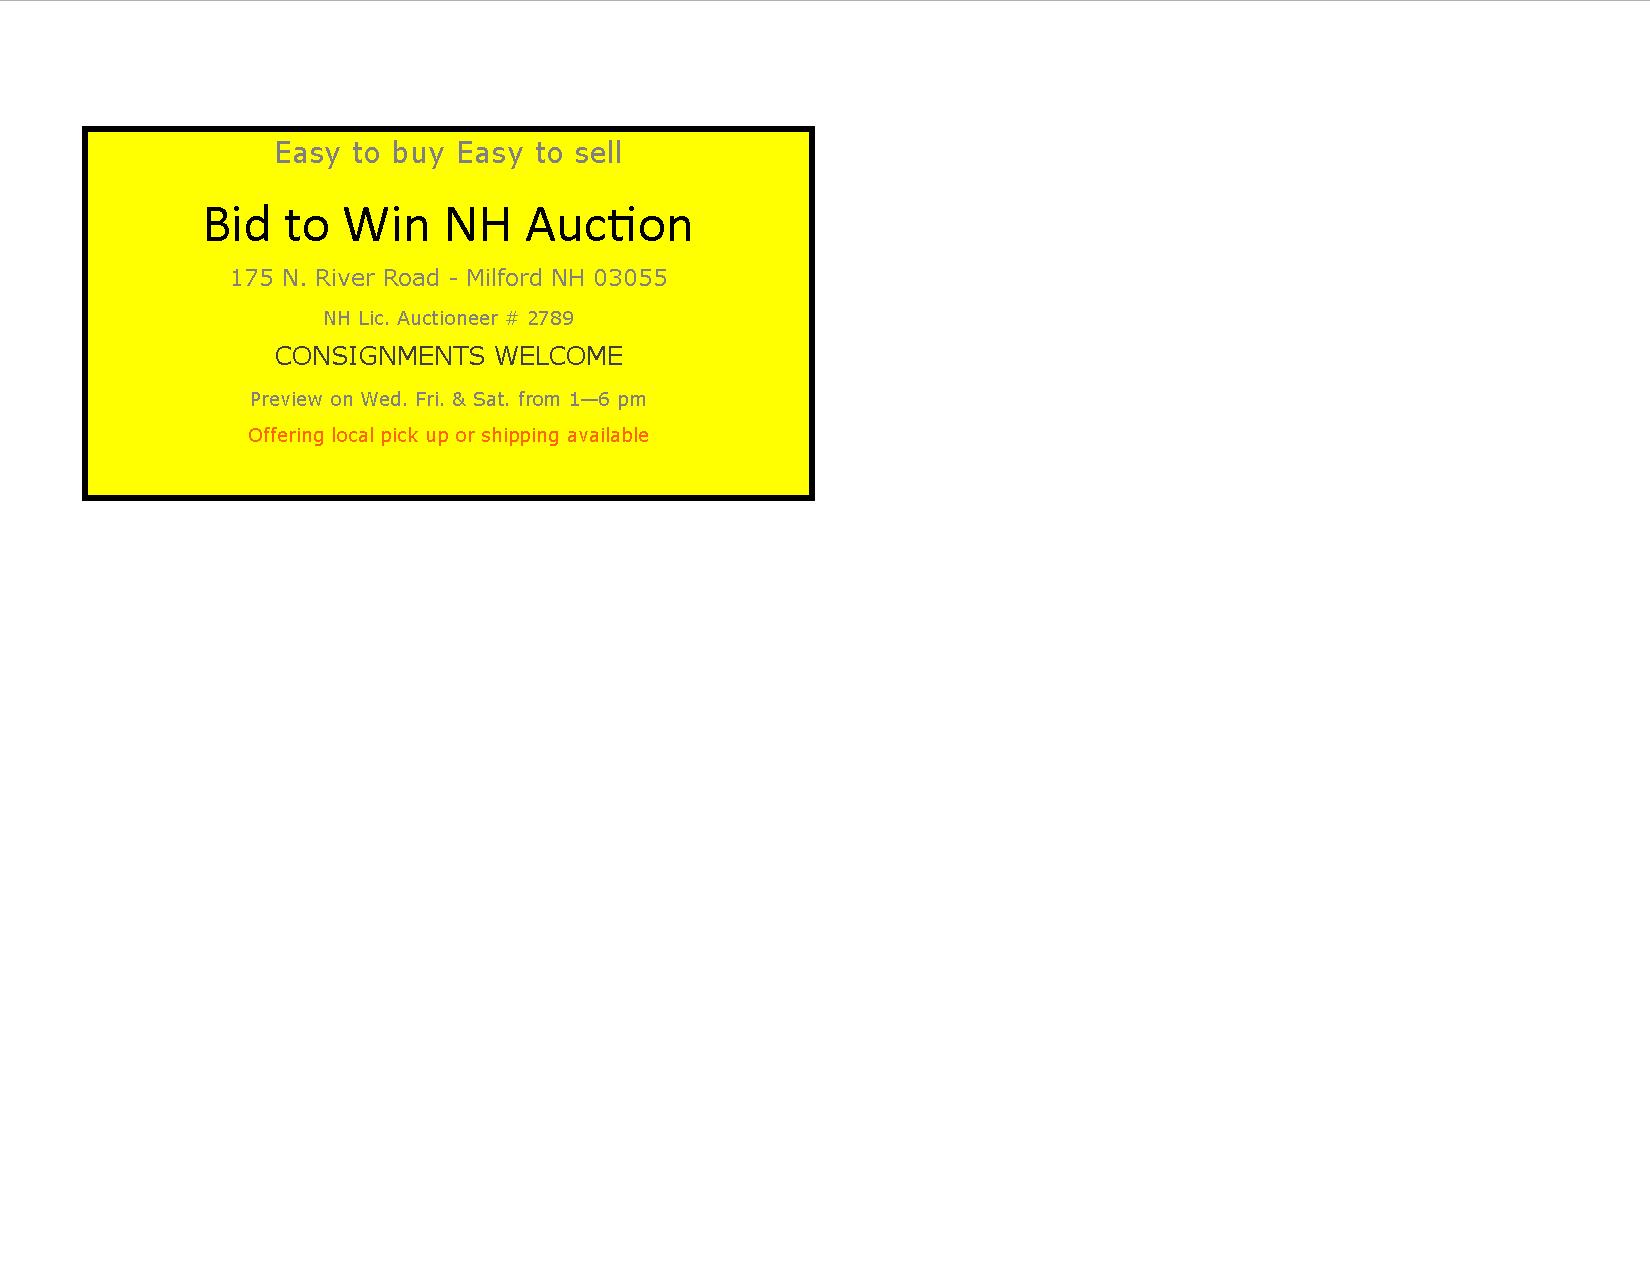 /bid-to-win-nh-auction/banner/